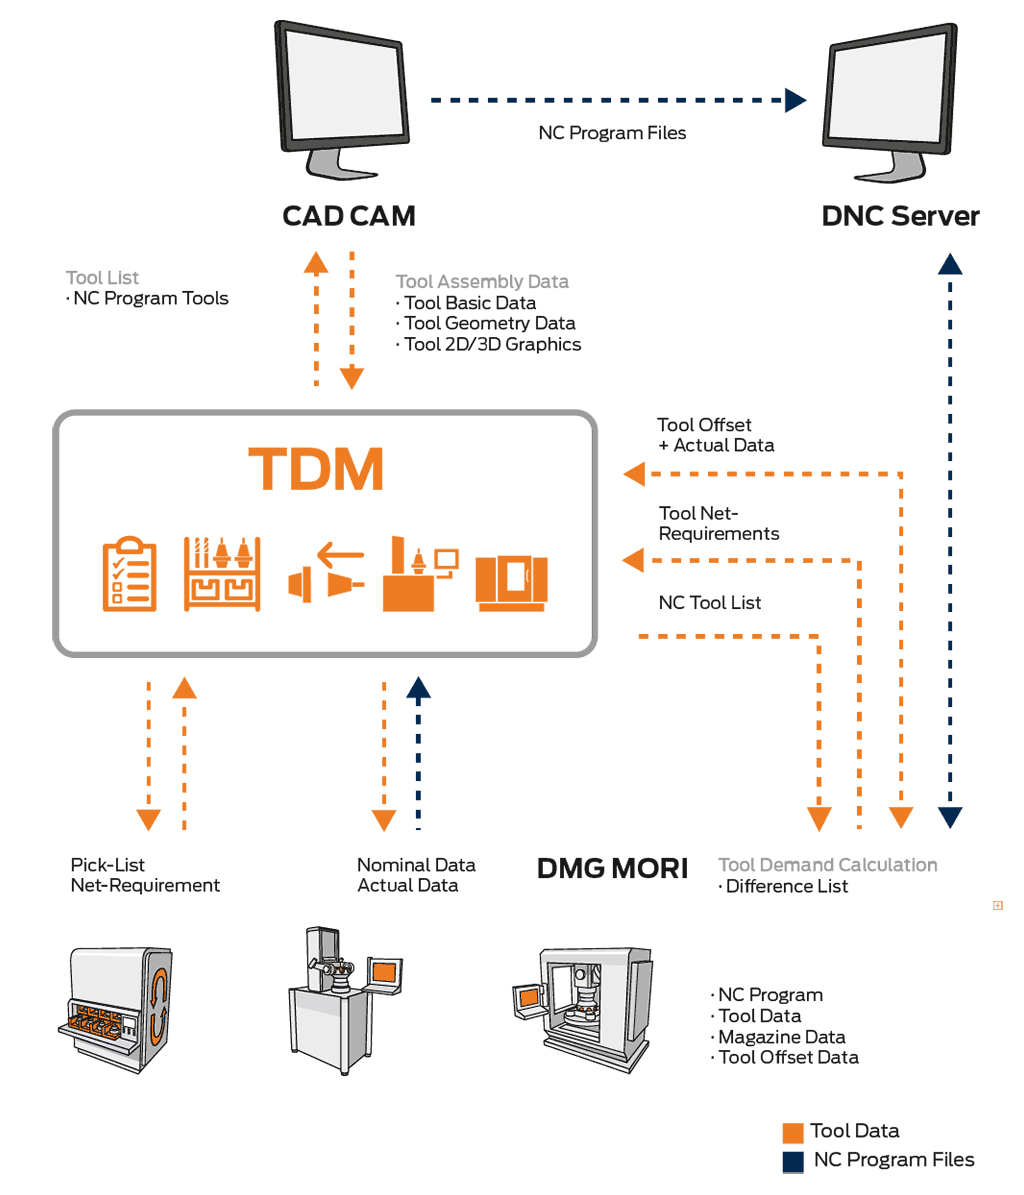 Fully digitalized cycle - TDM Systems & DMG MORI